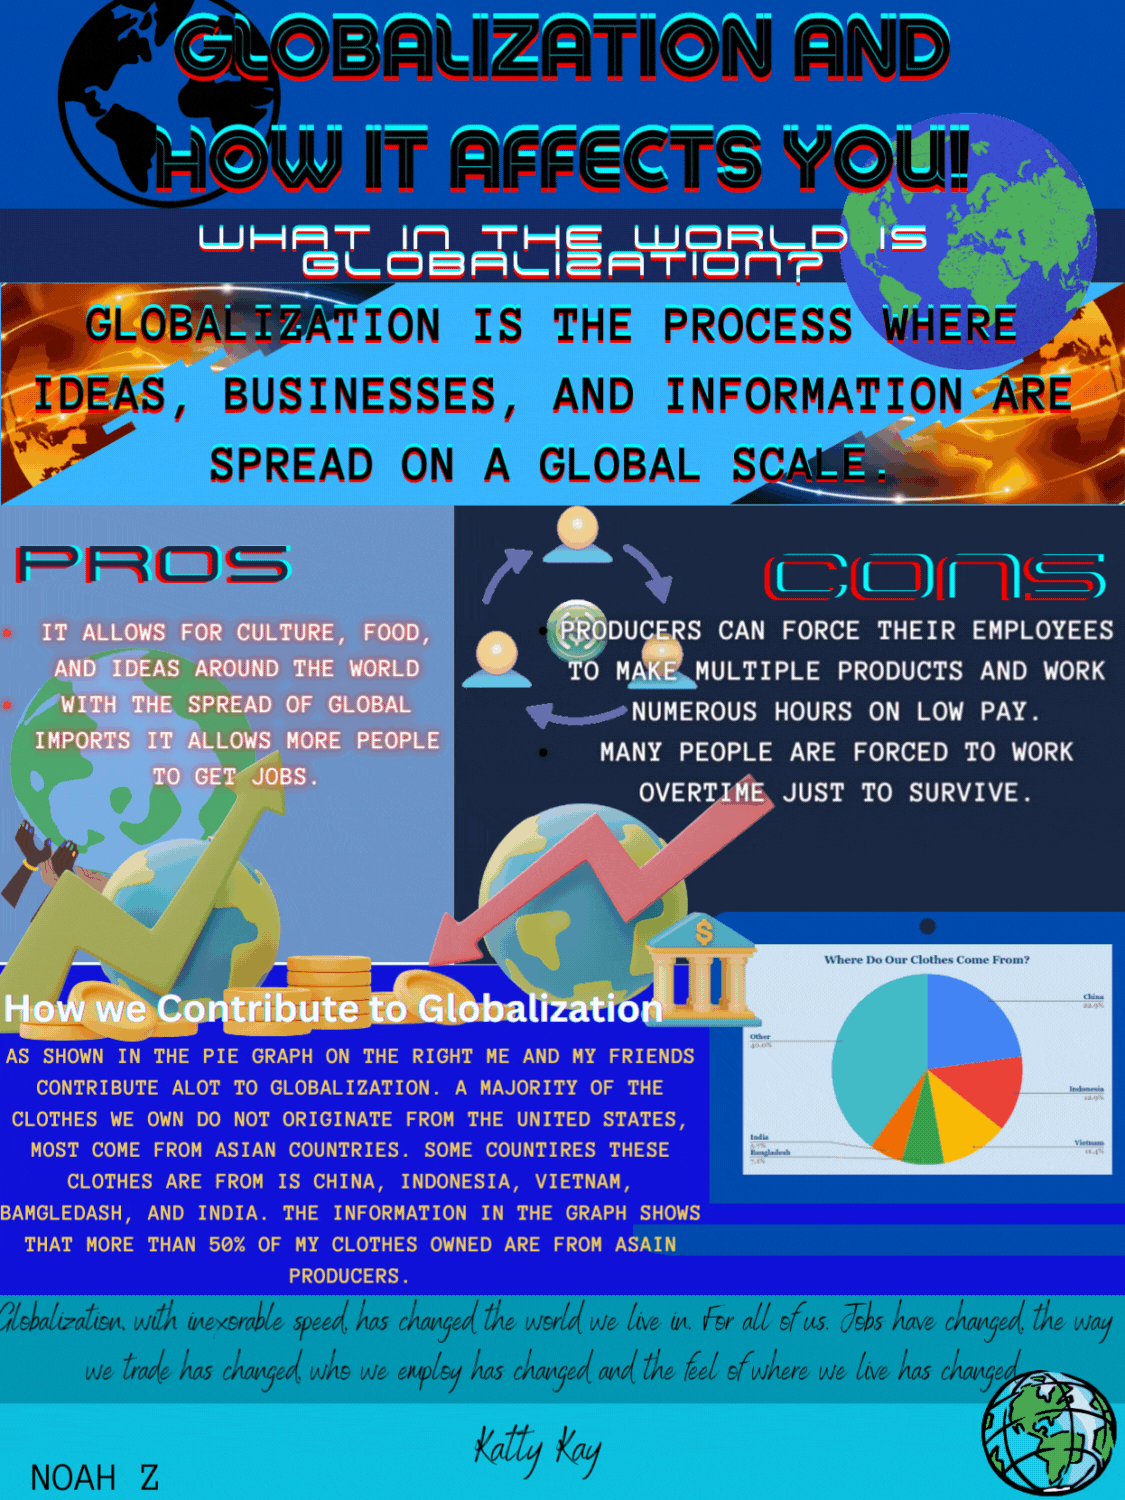 Globalization Infographic - Noah Z